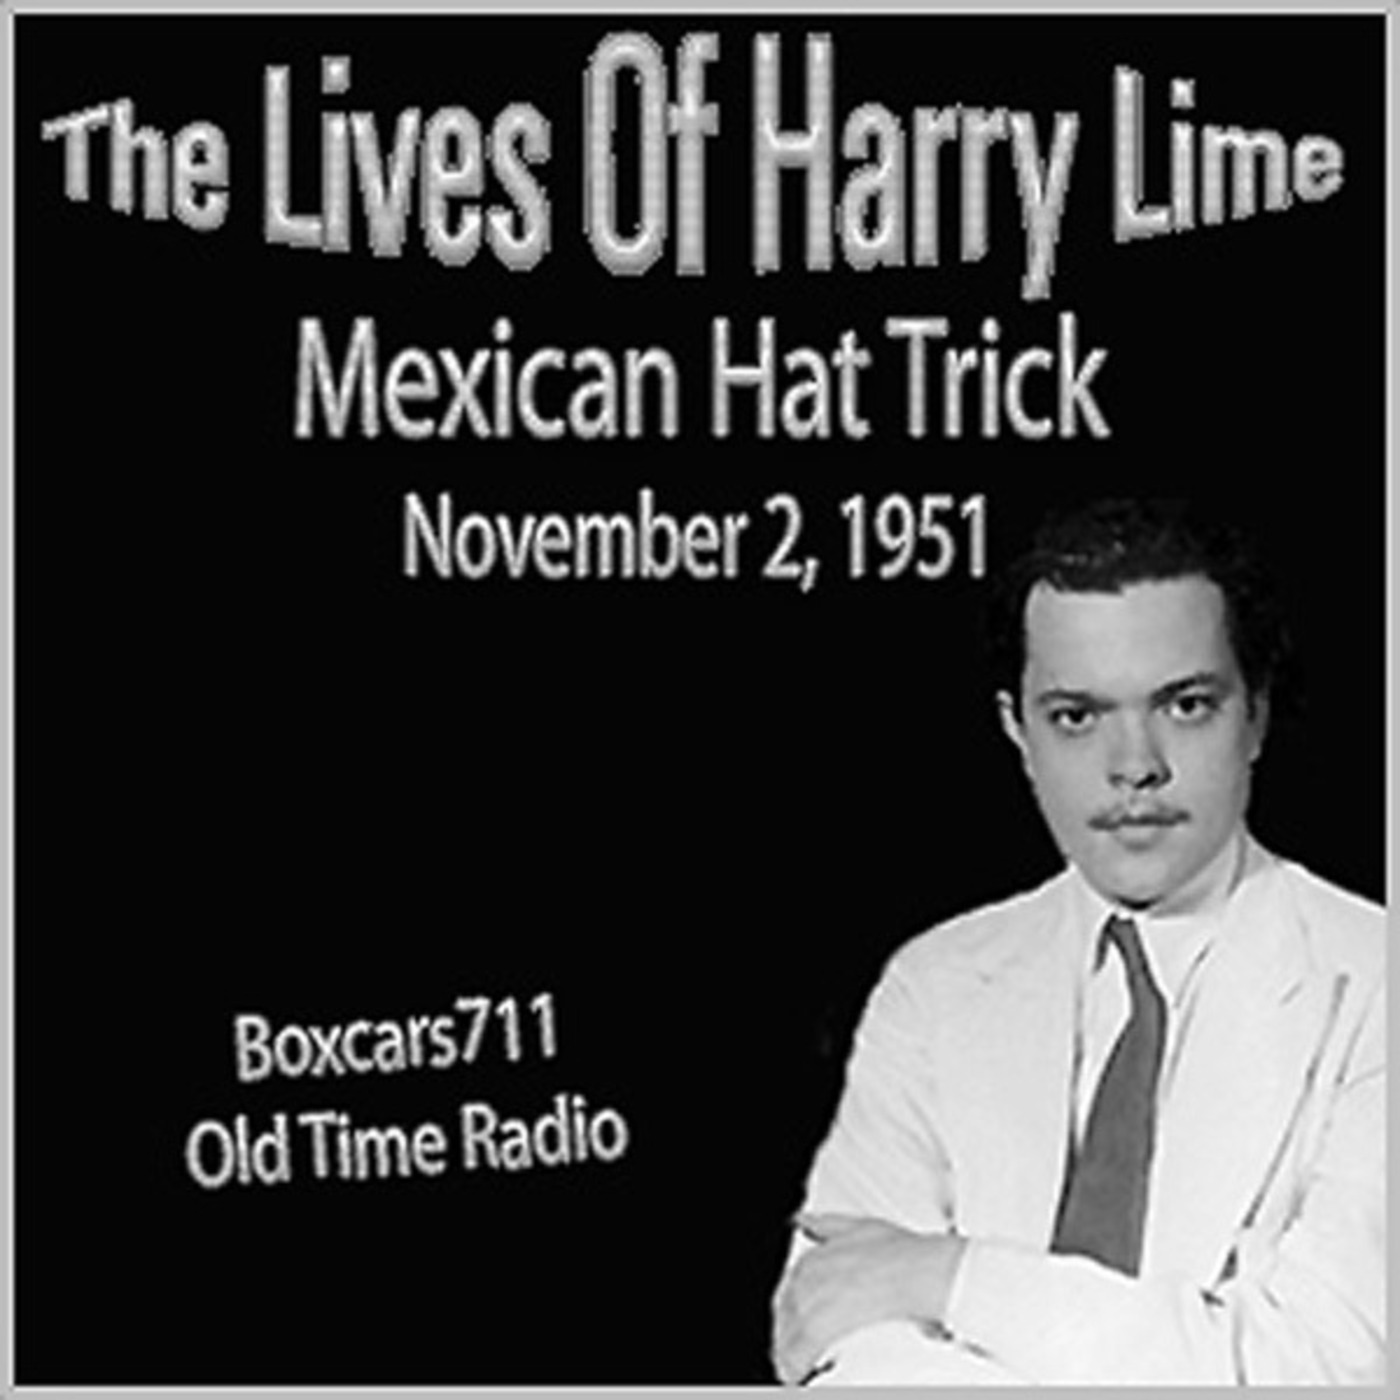 Episode 9640: Lives Of Harry Lime - 